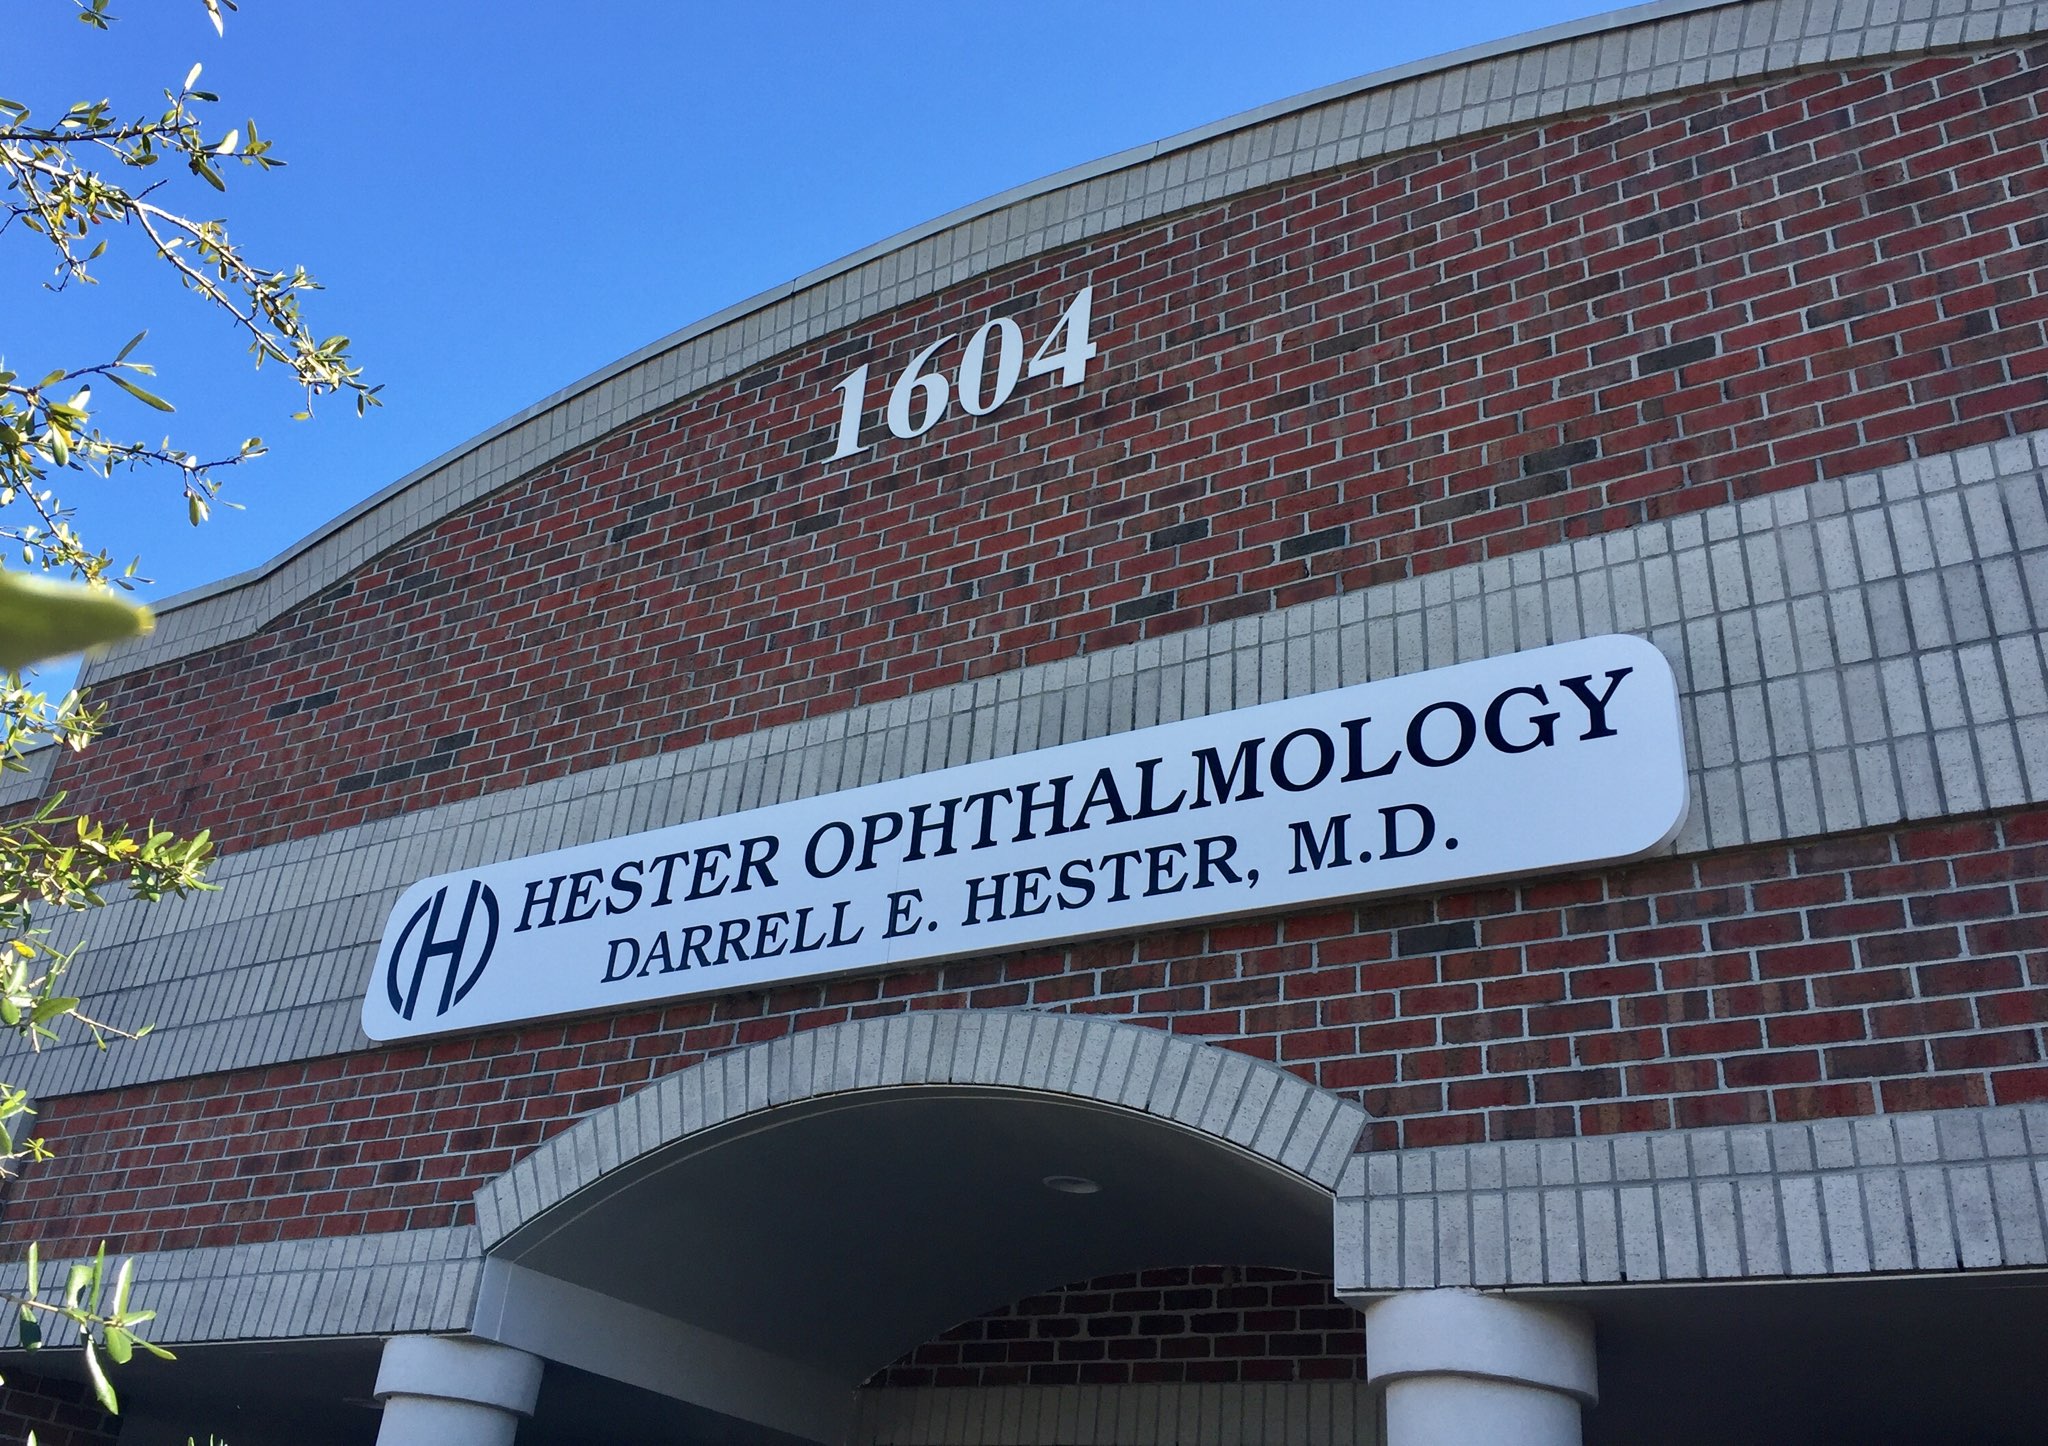 Hester Ophthalmology: Darrell E Hester, M.D. Photo